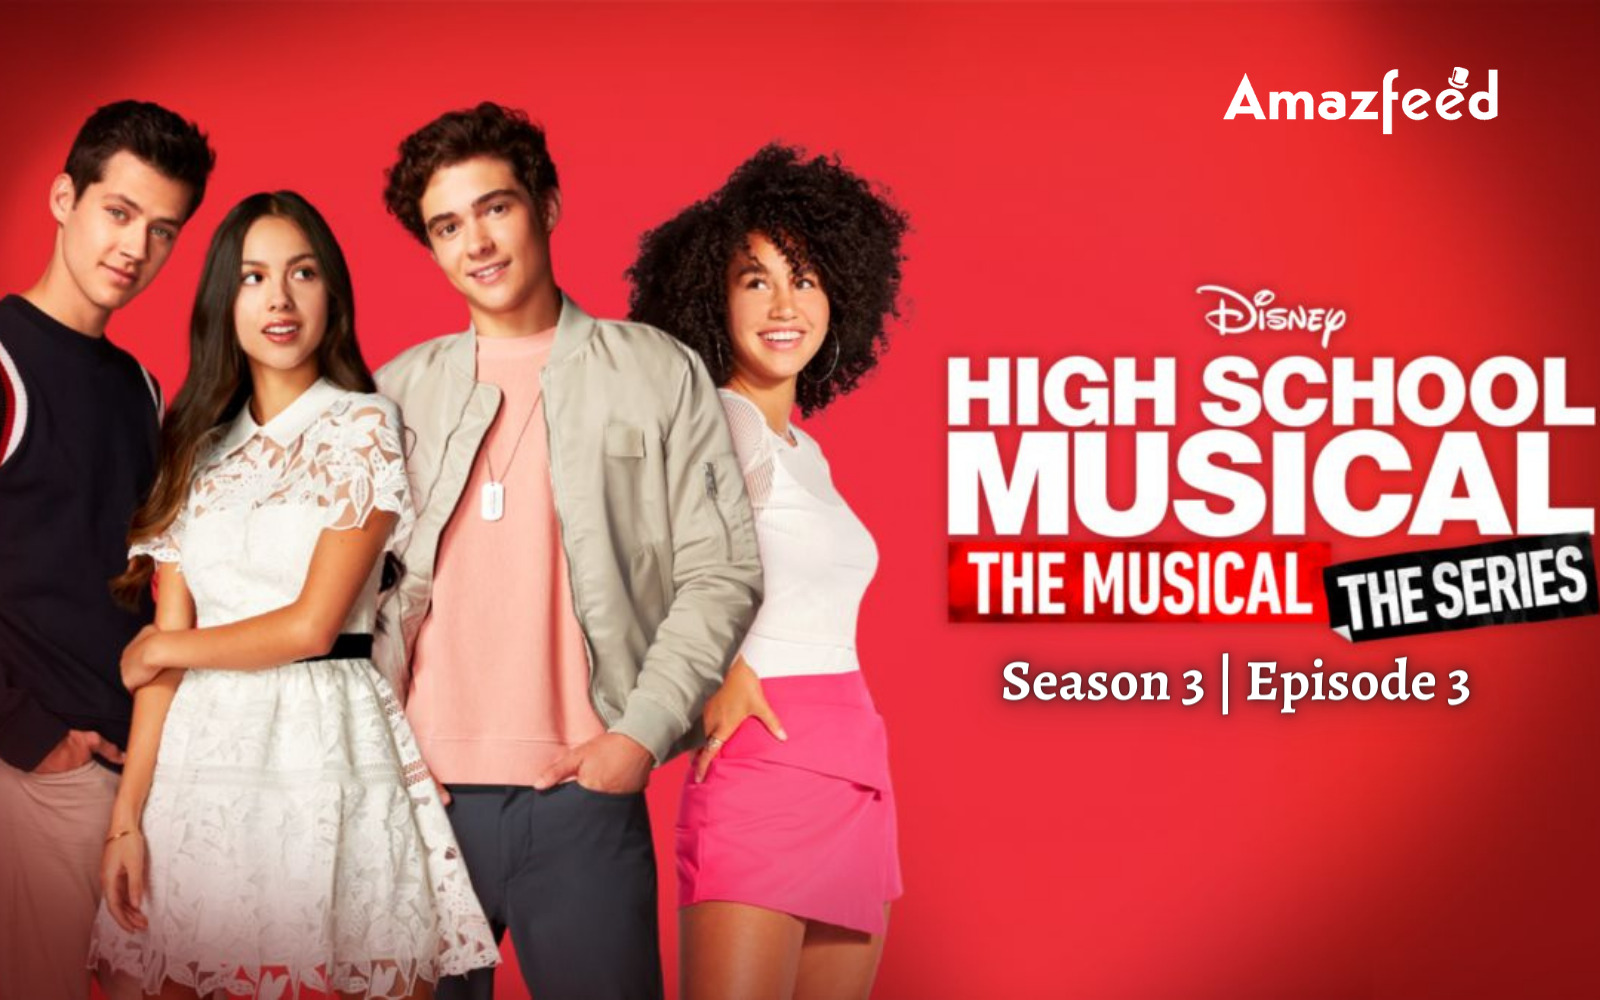 High School Musical The Series Season 3 Episode 3 Release Date